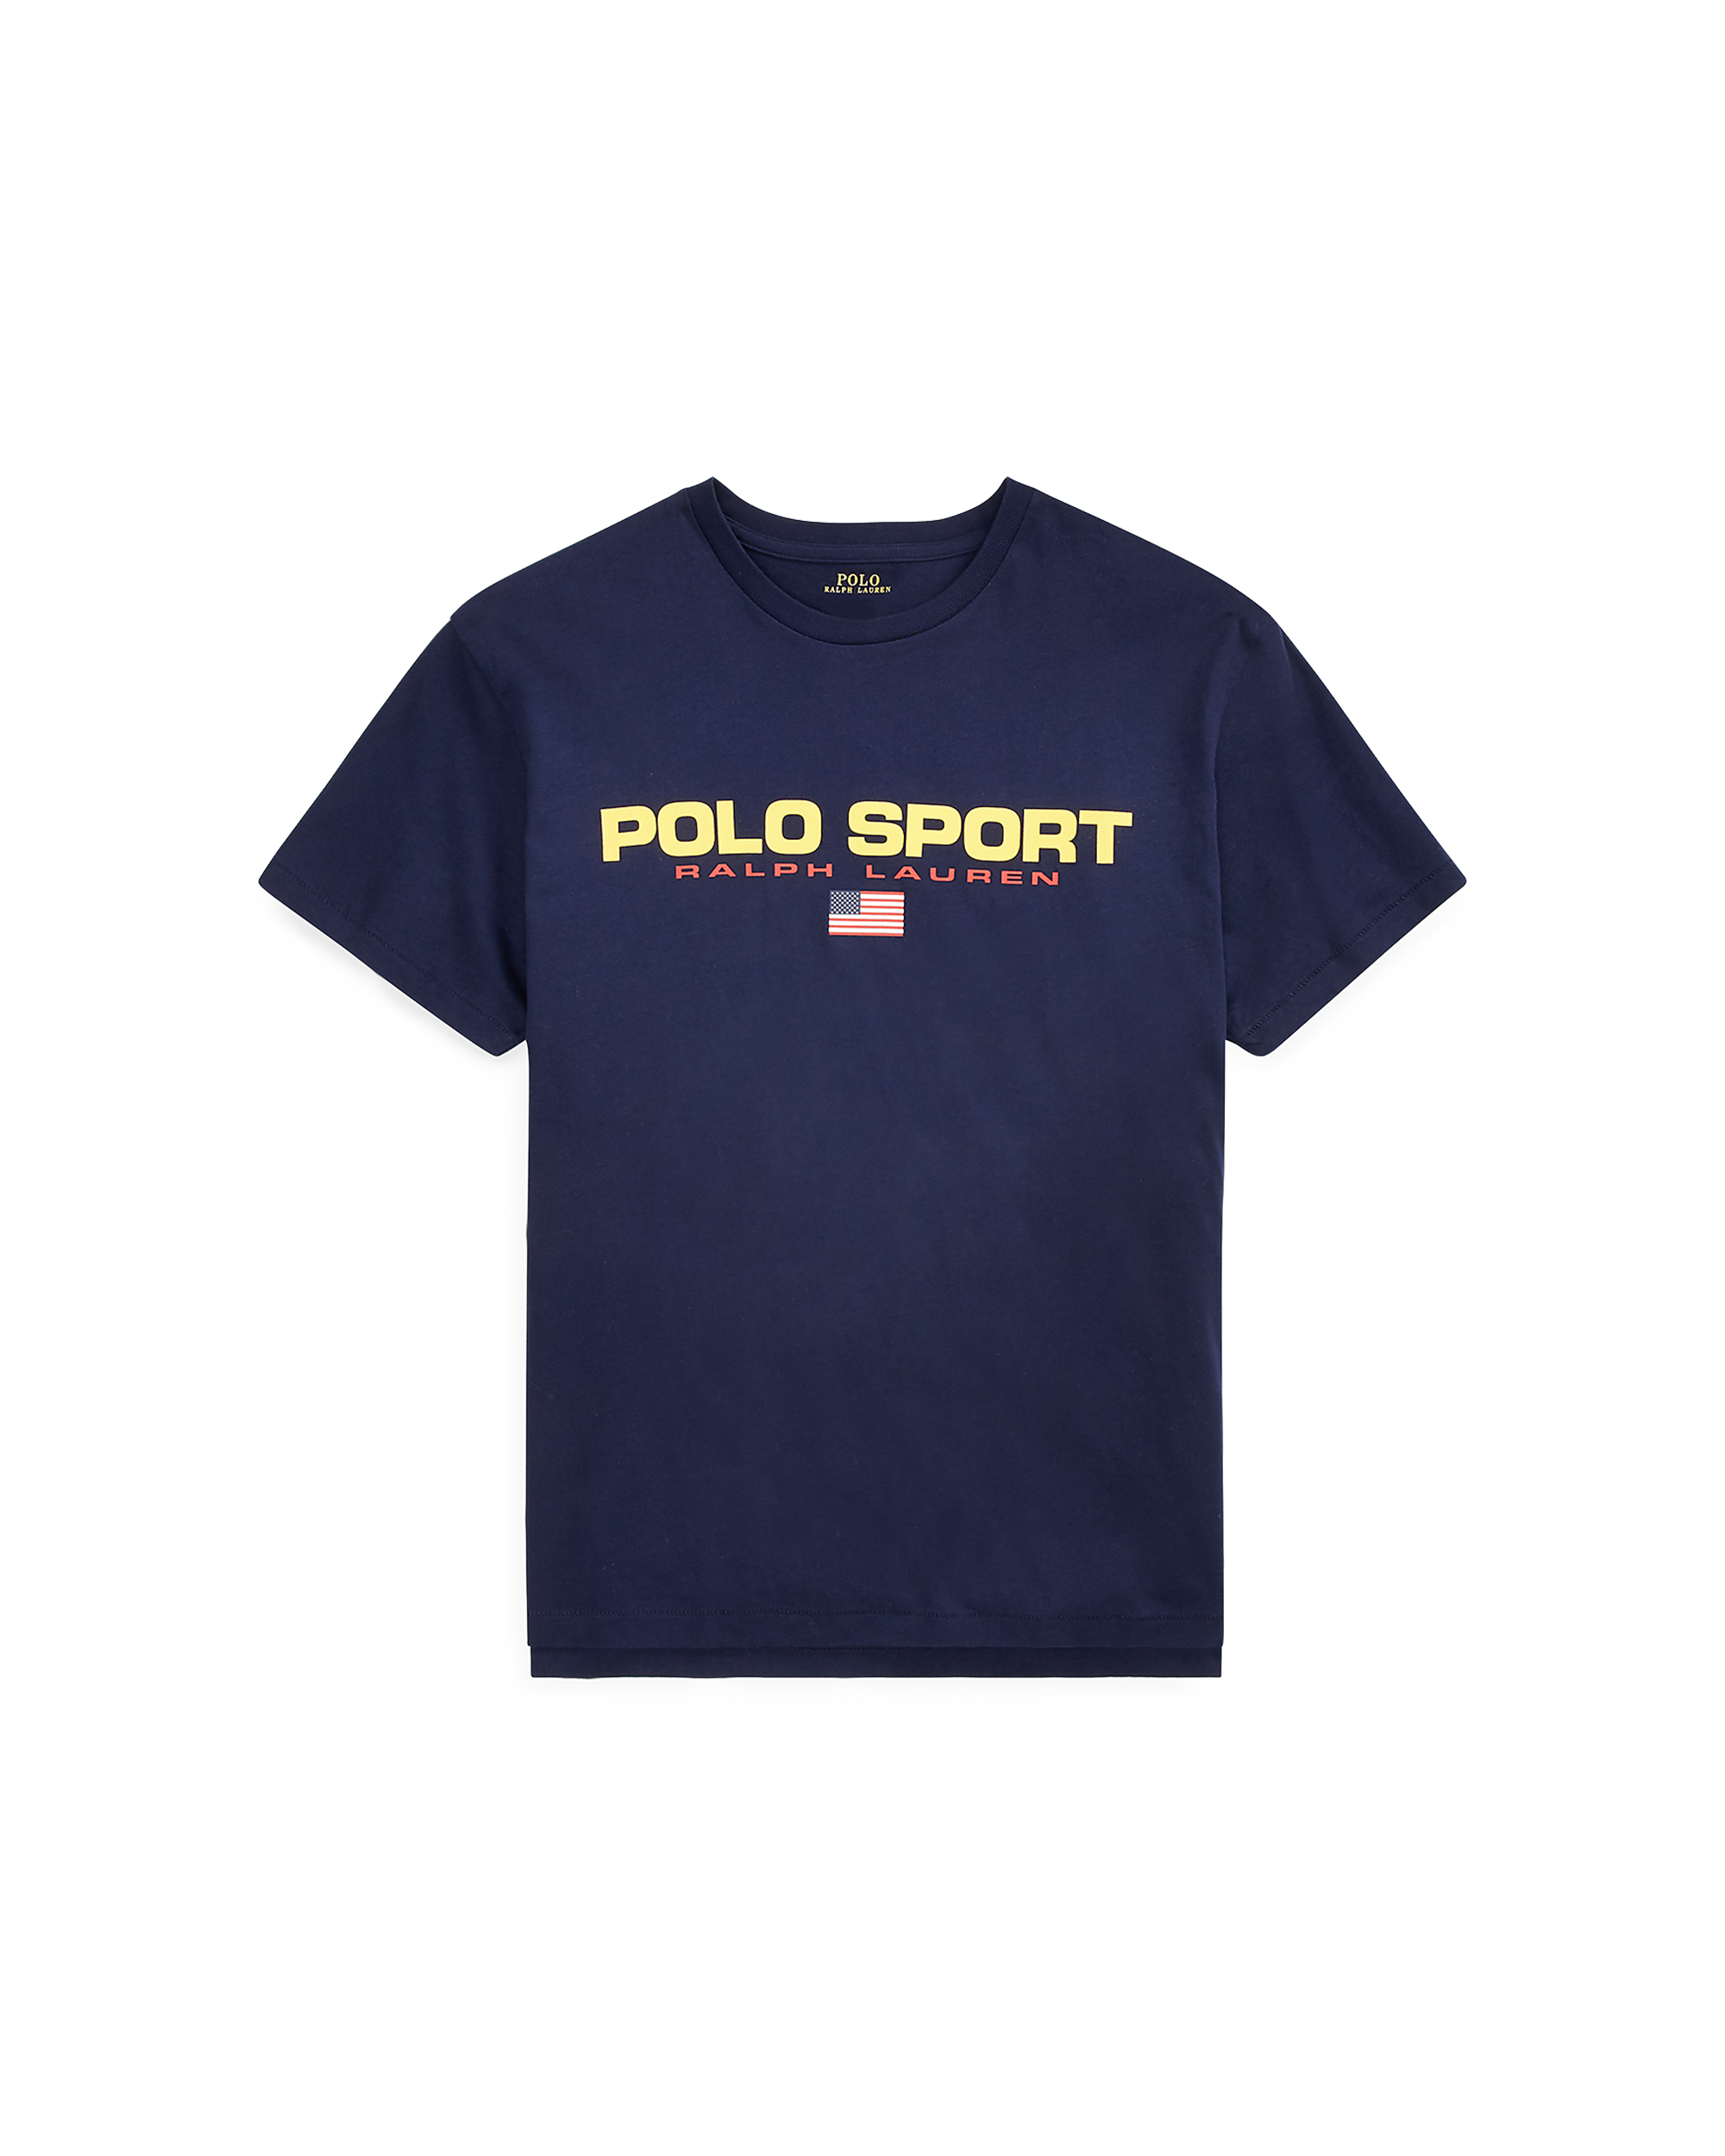 Polo Sport T-Shirt - Navy